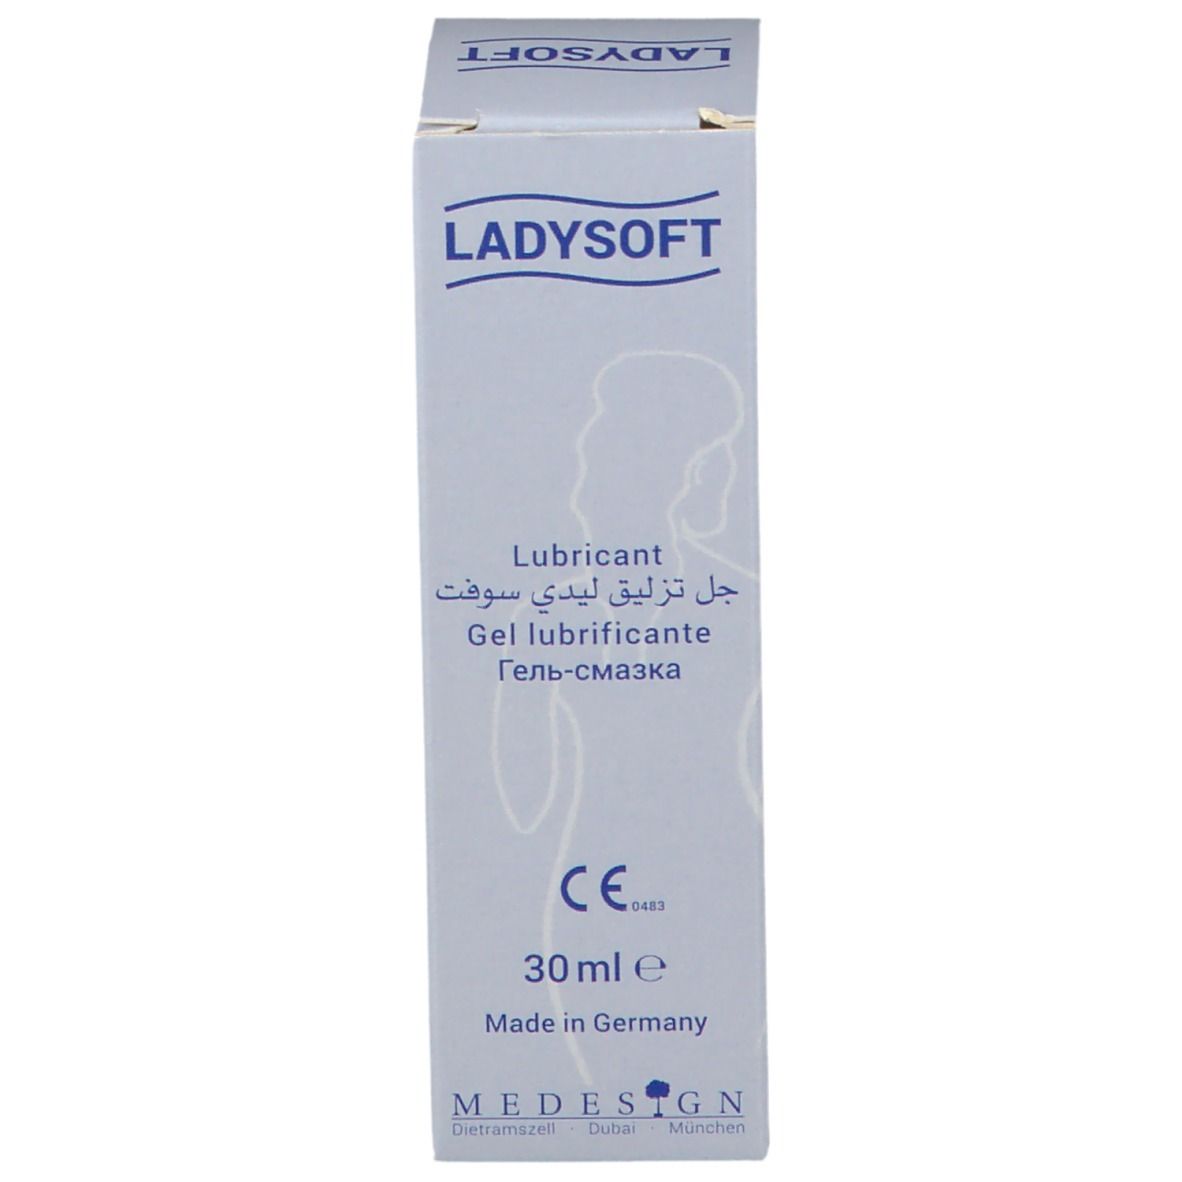 Ladysoft Lubrifiant